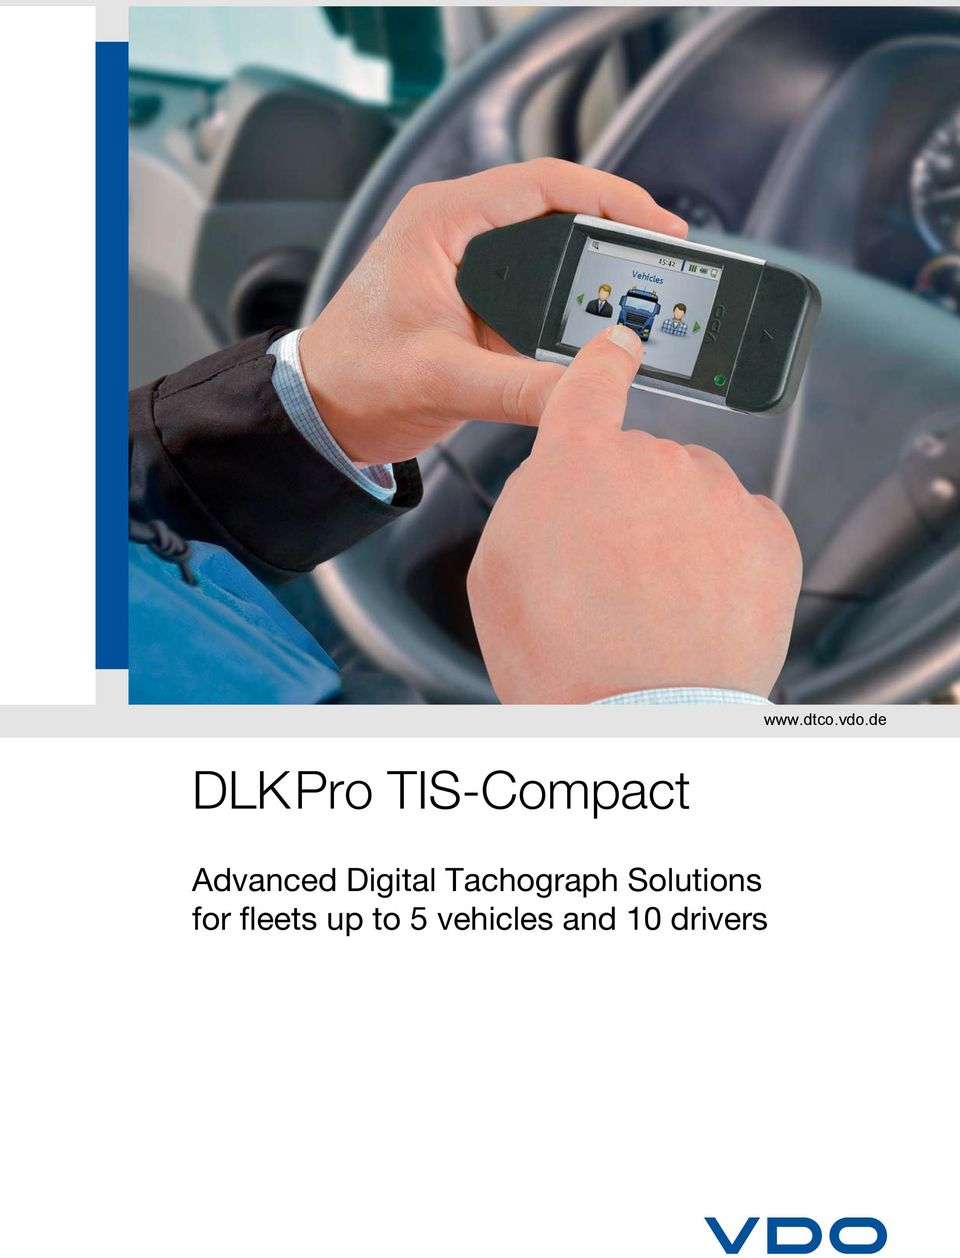 Advanced Digital Tachograph